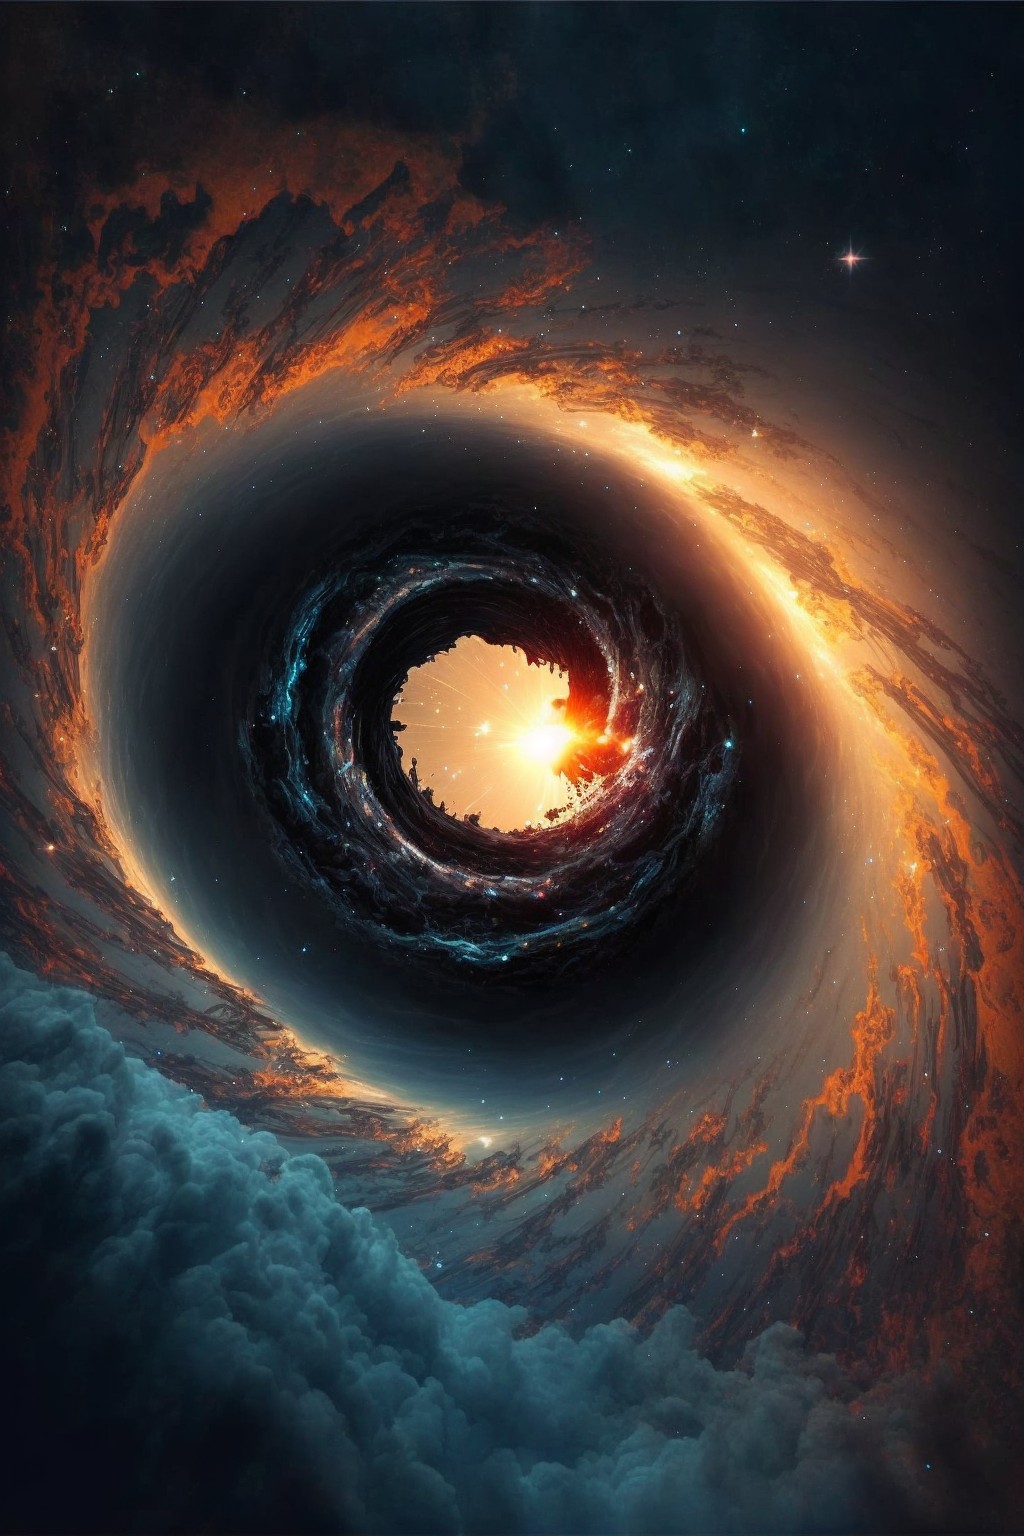 A black hole devours a star